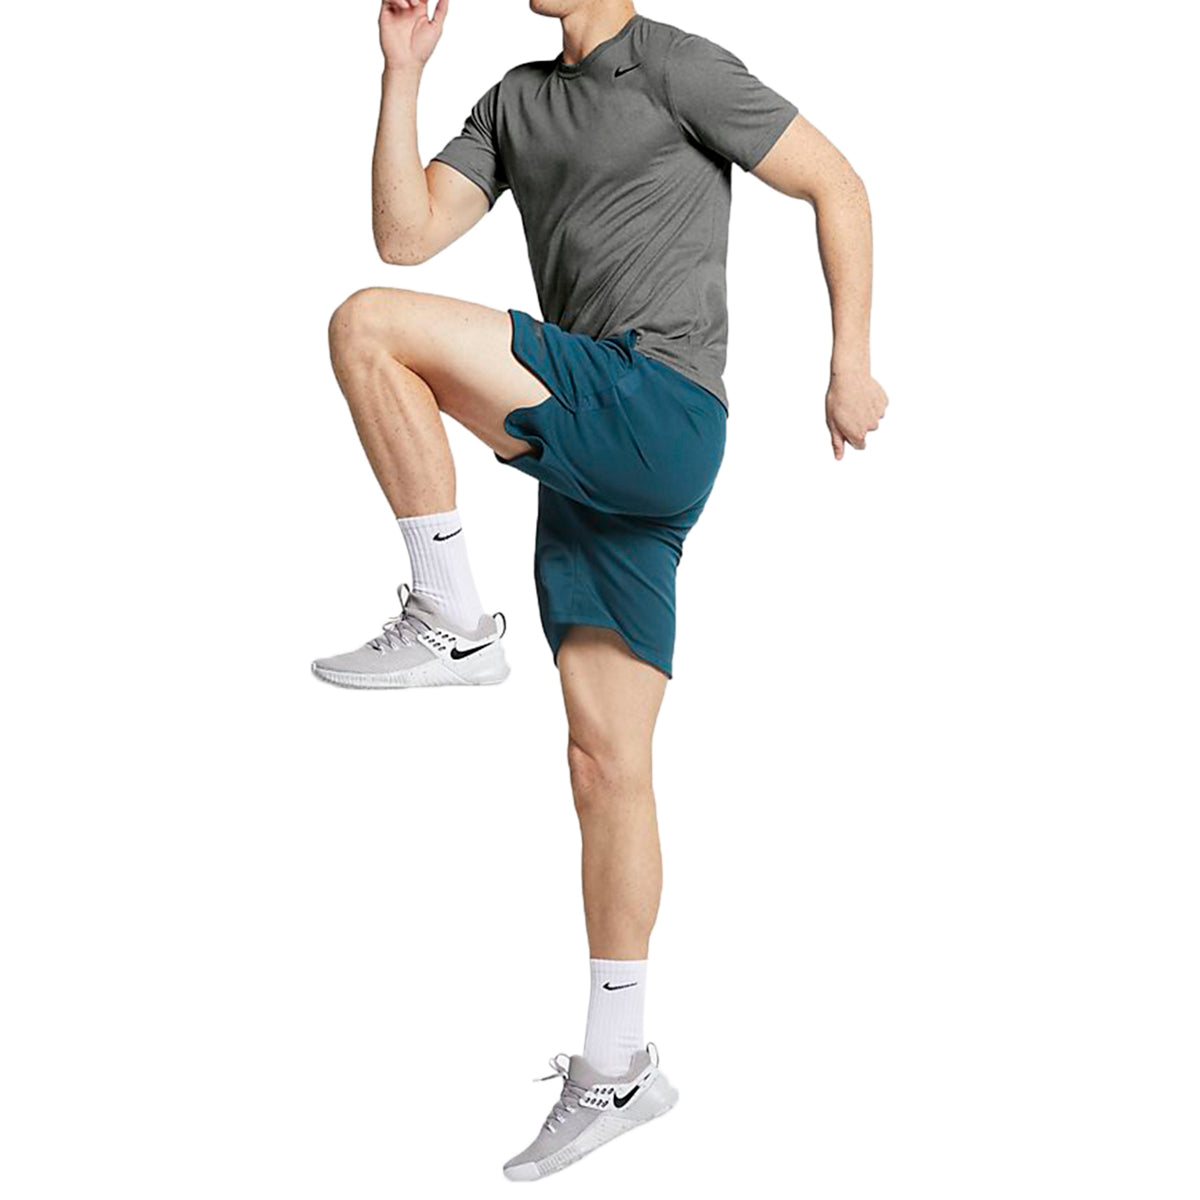 Nike Dri-fit Legend Training T-shirt  Mens Style : 718833